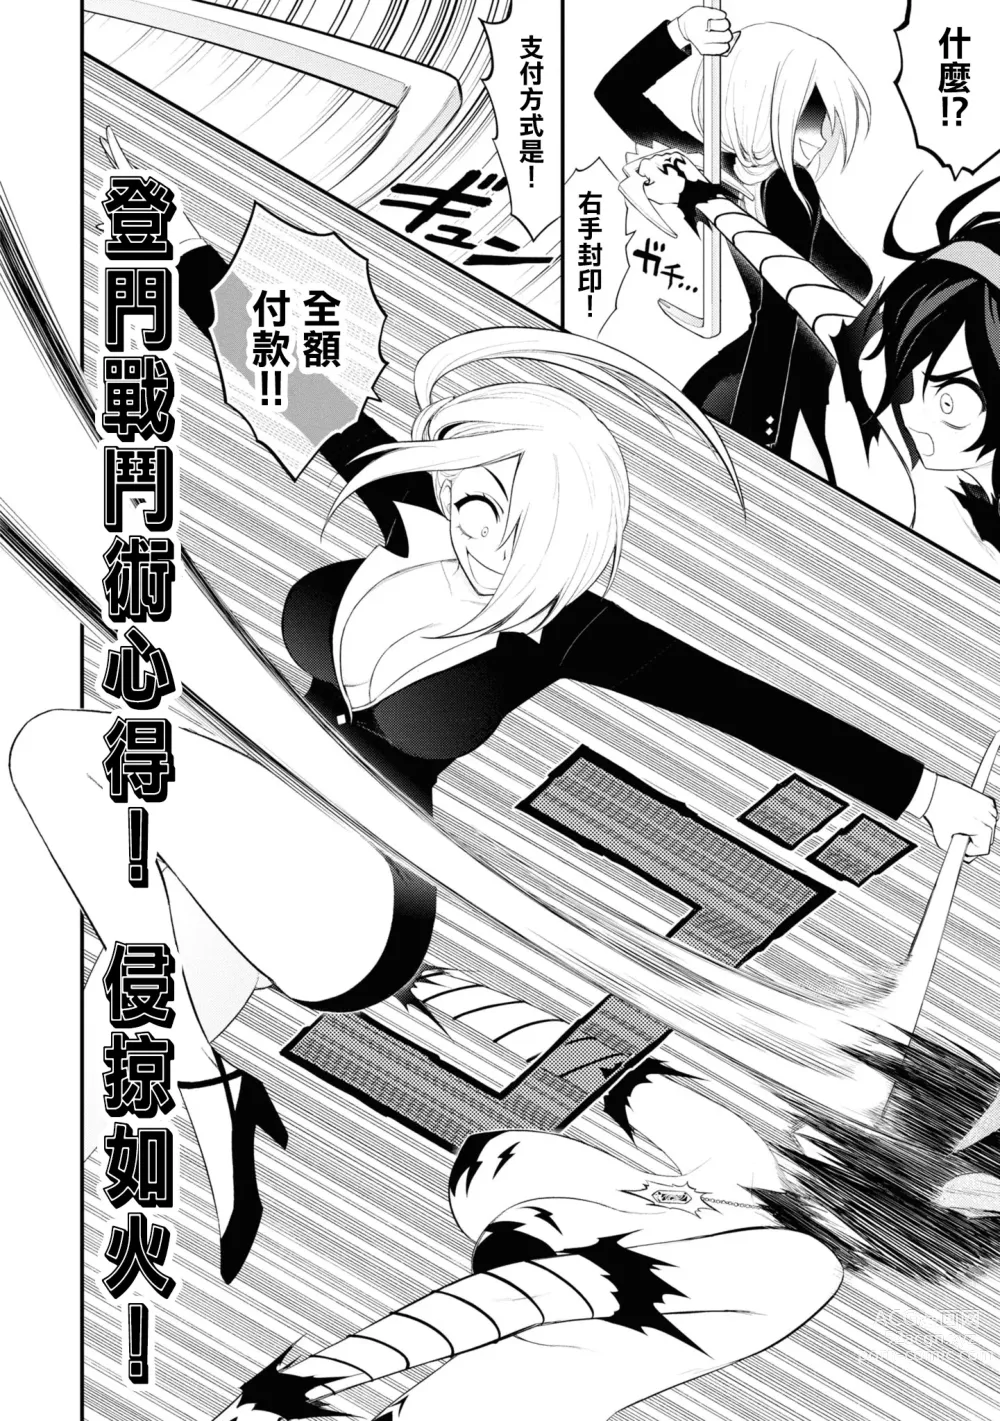 Page 119 of manga 淫獄小區 15-19話